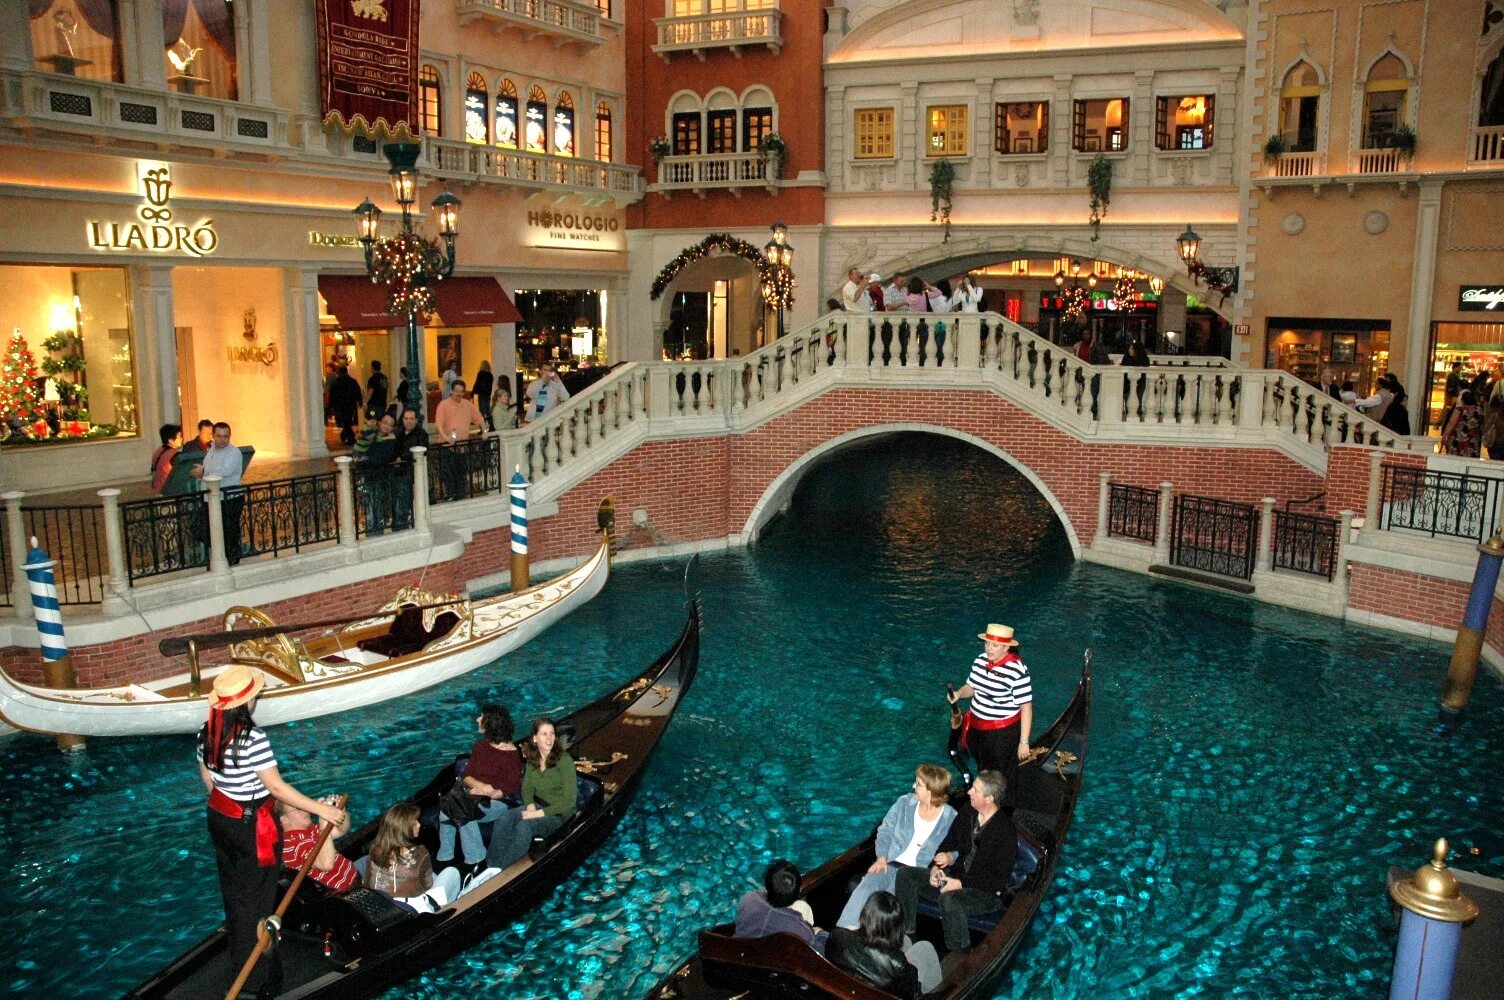 Vegas grant vegasgrandcazino. Grand canal Shoppes, Лас-Вегас, США. Отель казино Венеция Лас Вегас. Grand canal Shoppes в Лас-Вегасе. Венецианский отель (the Venetian) в Лас-Вегасе.